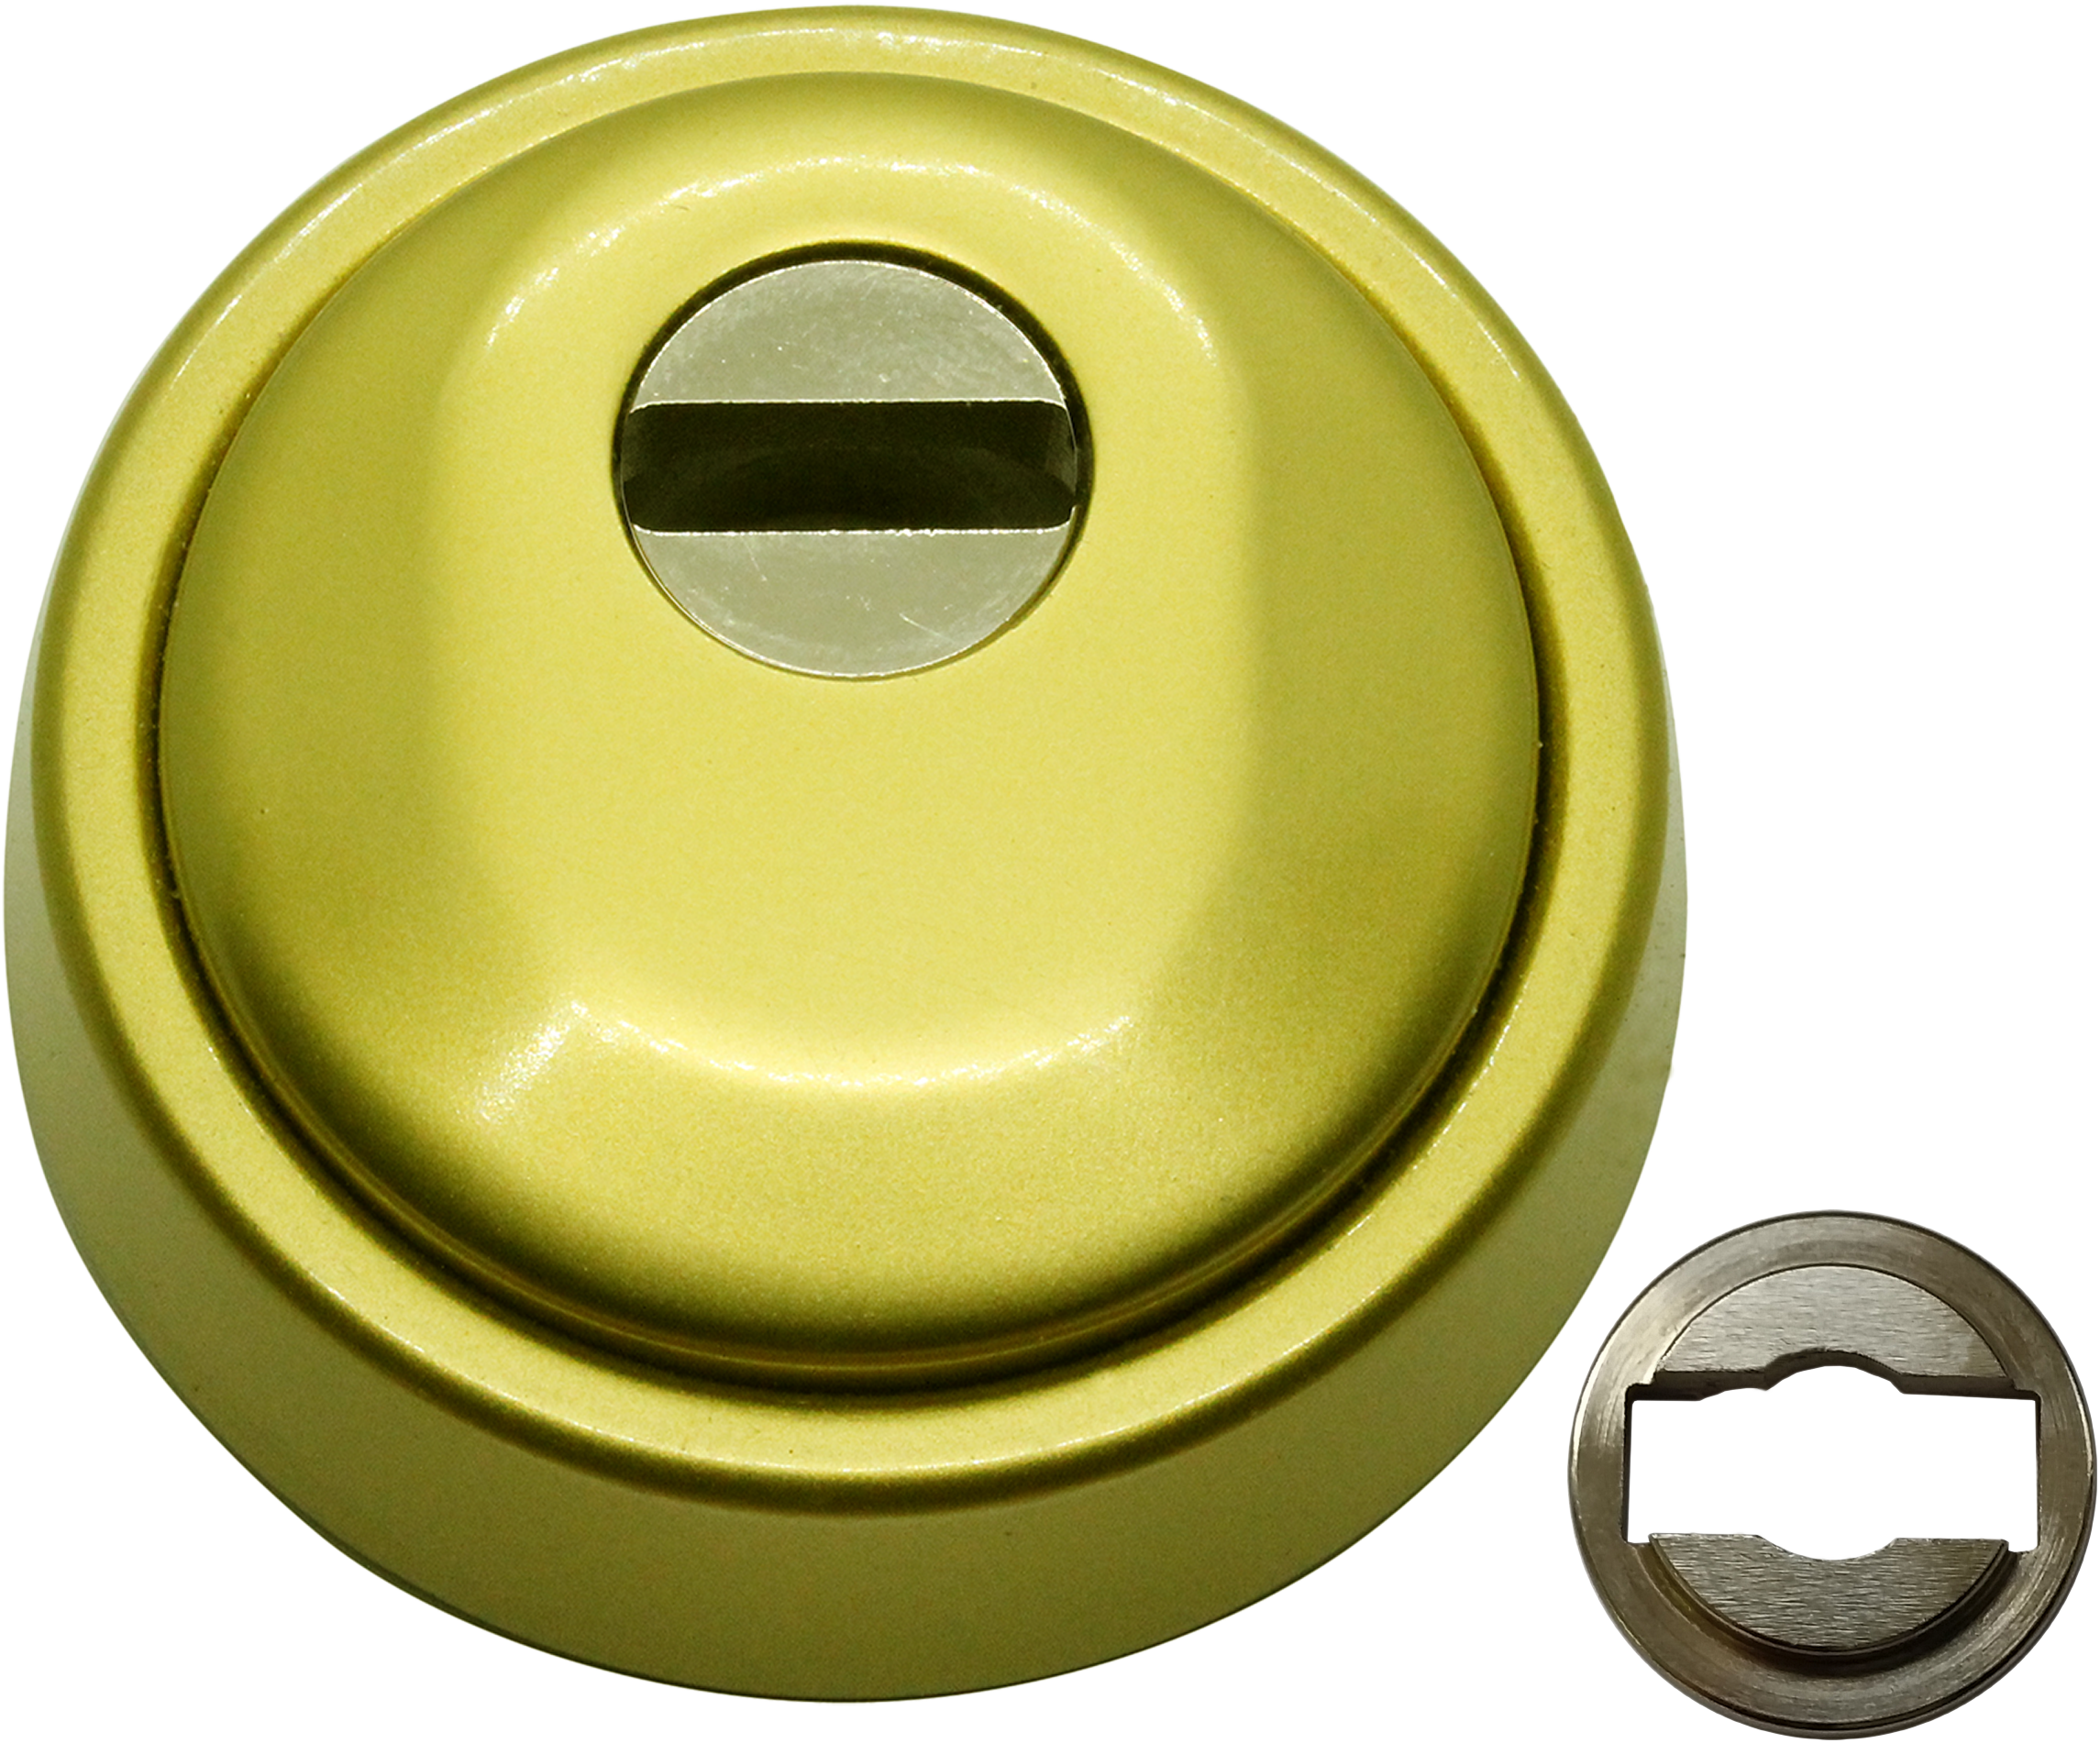 Escudo de seguridad para cilindro hoplon dorado pintado